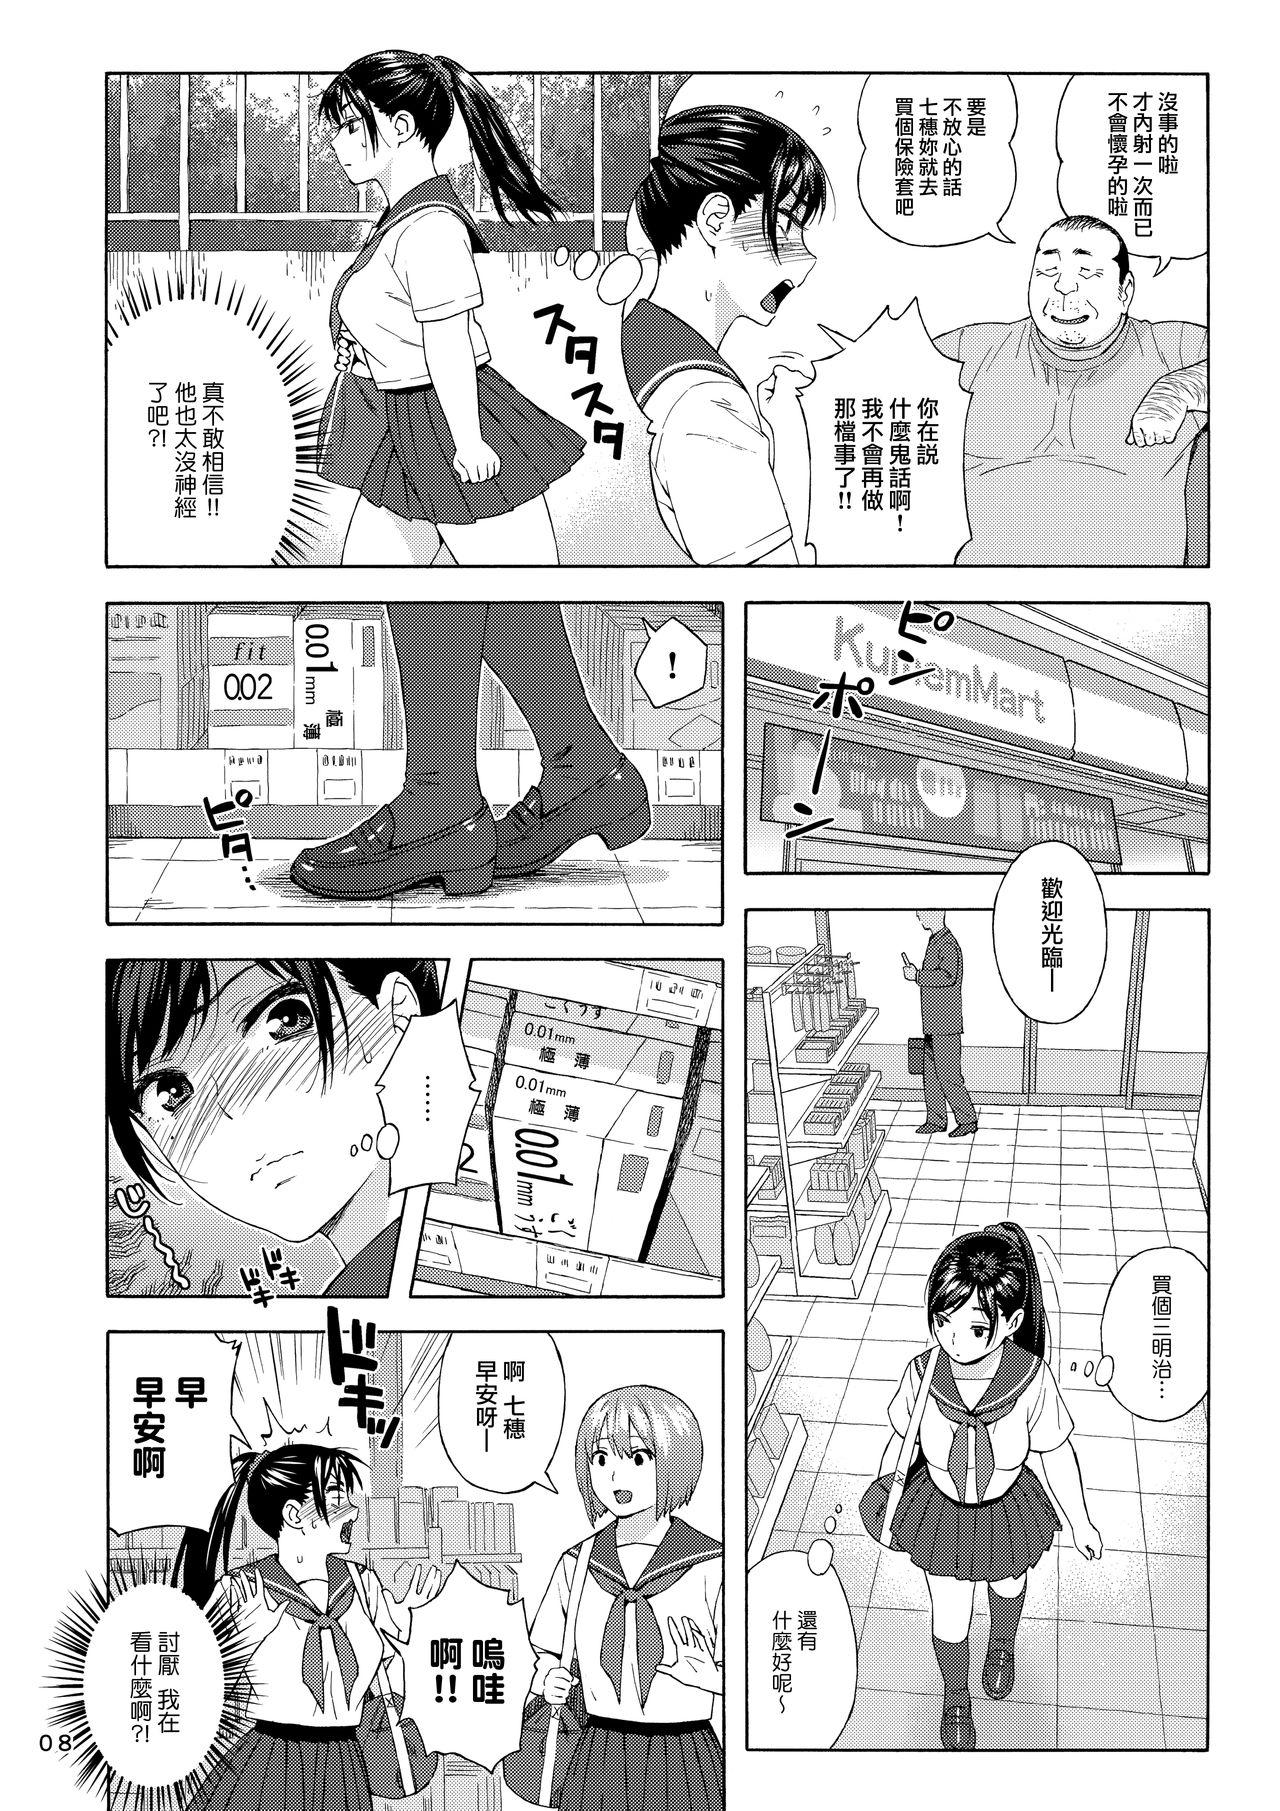 Bareback Otouto no Musume 2 - Original Story - Page 8